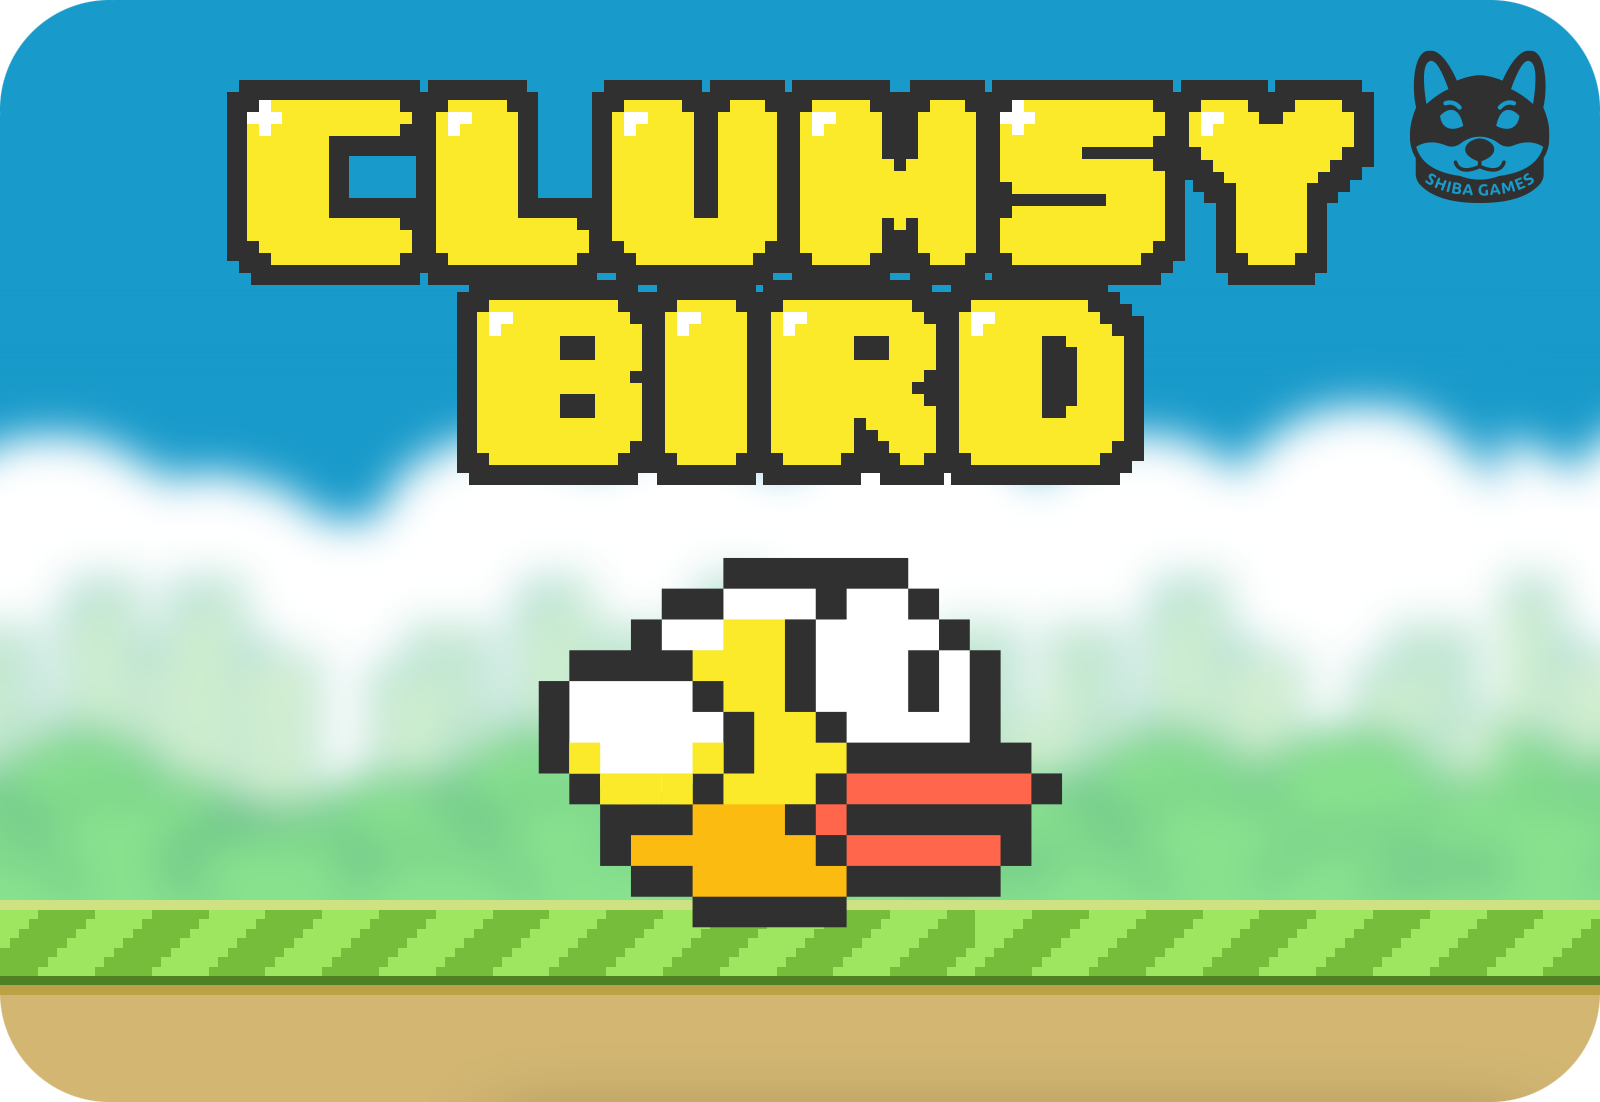 Clumsy Bird